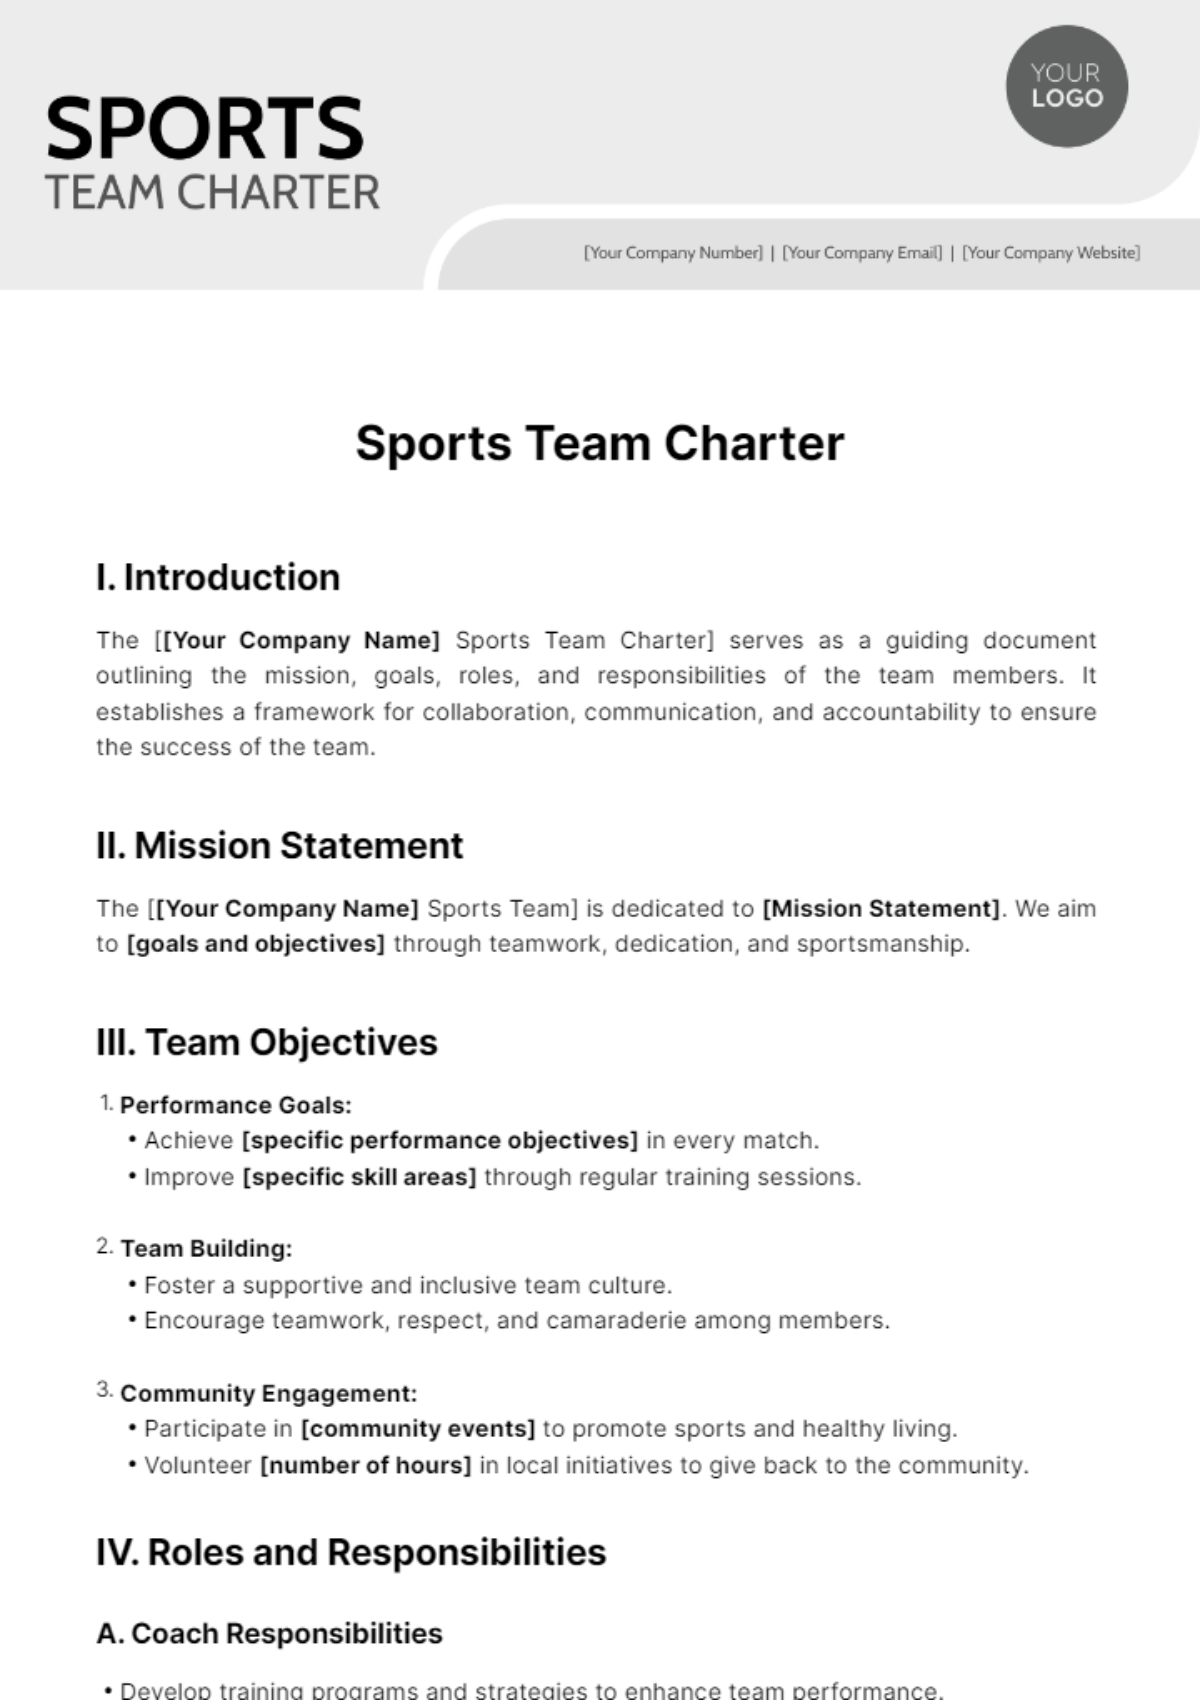 Sports Team Charter Template